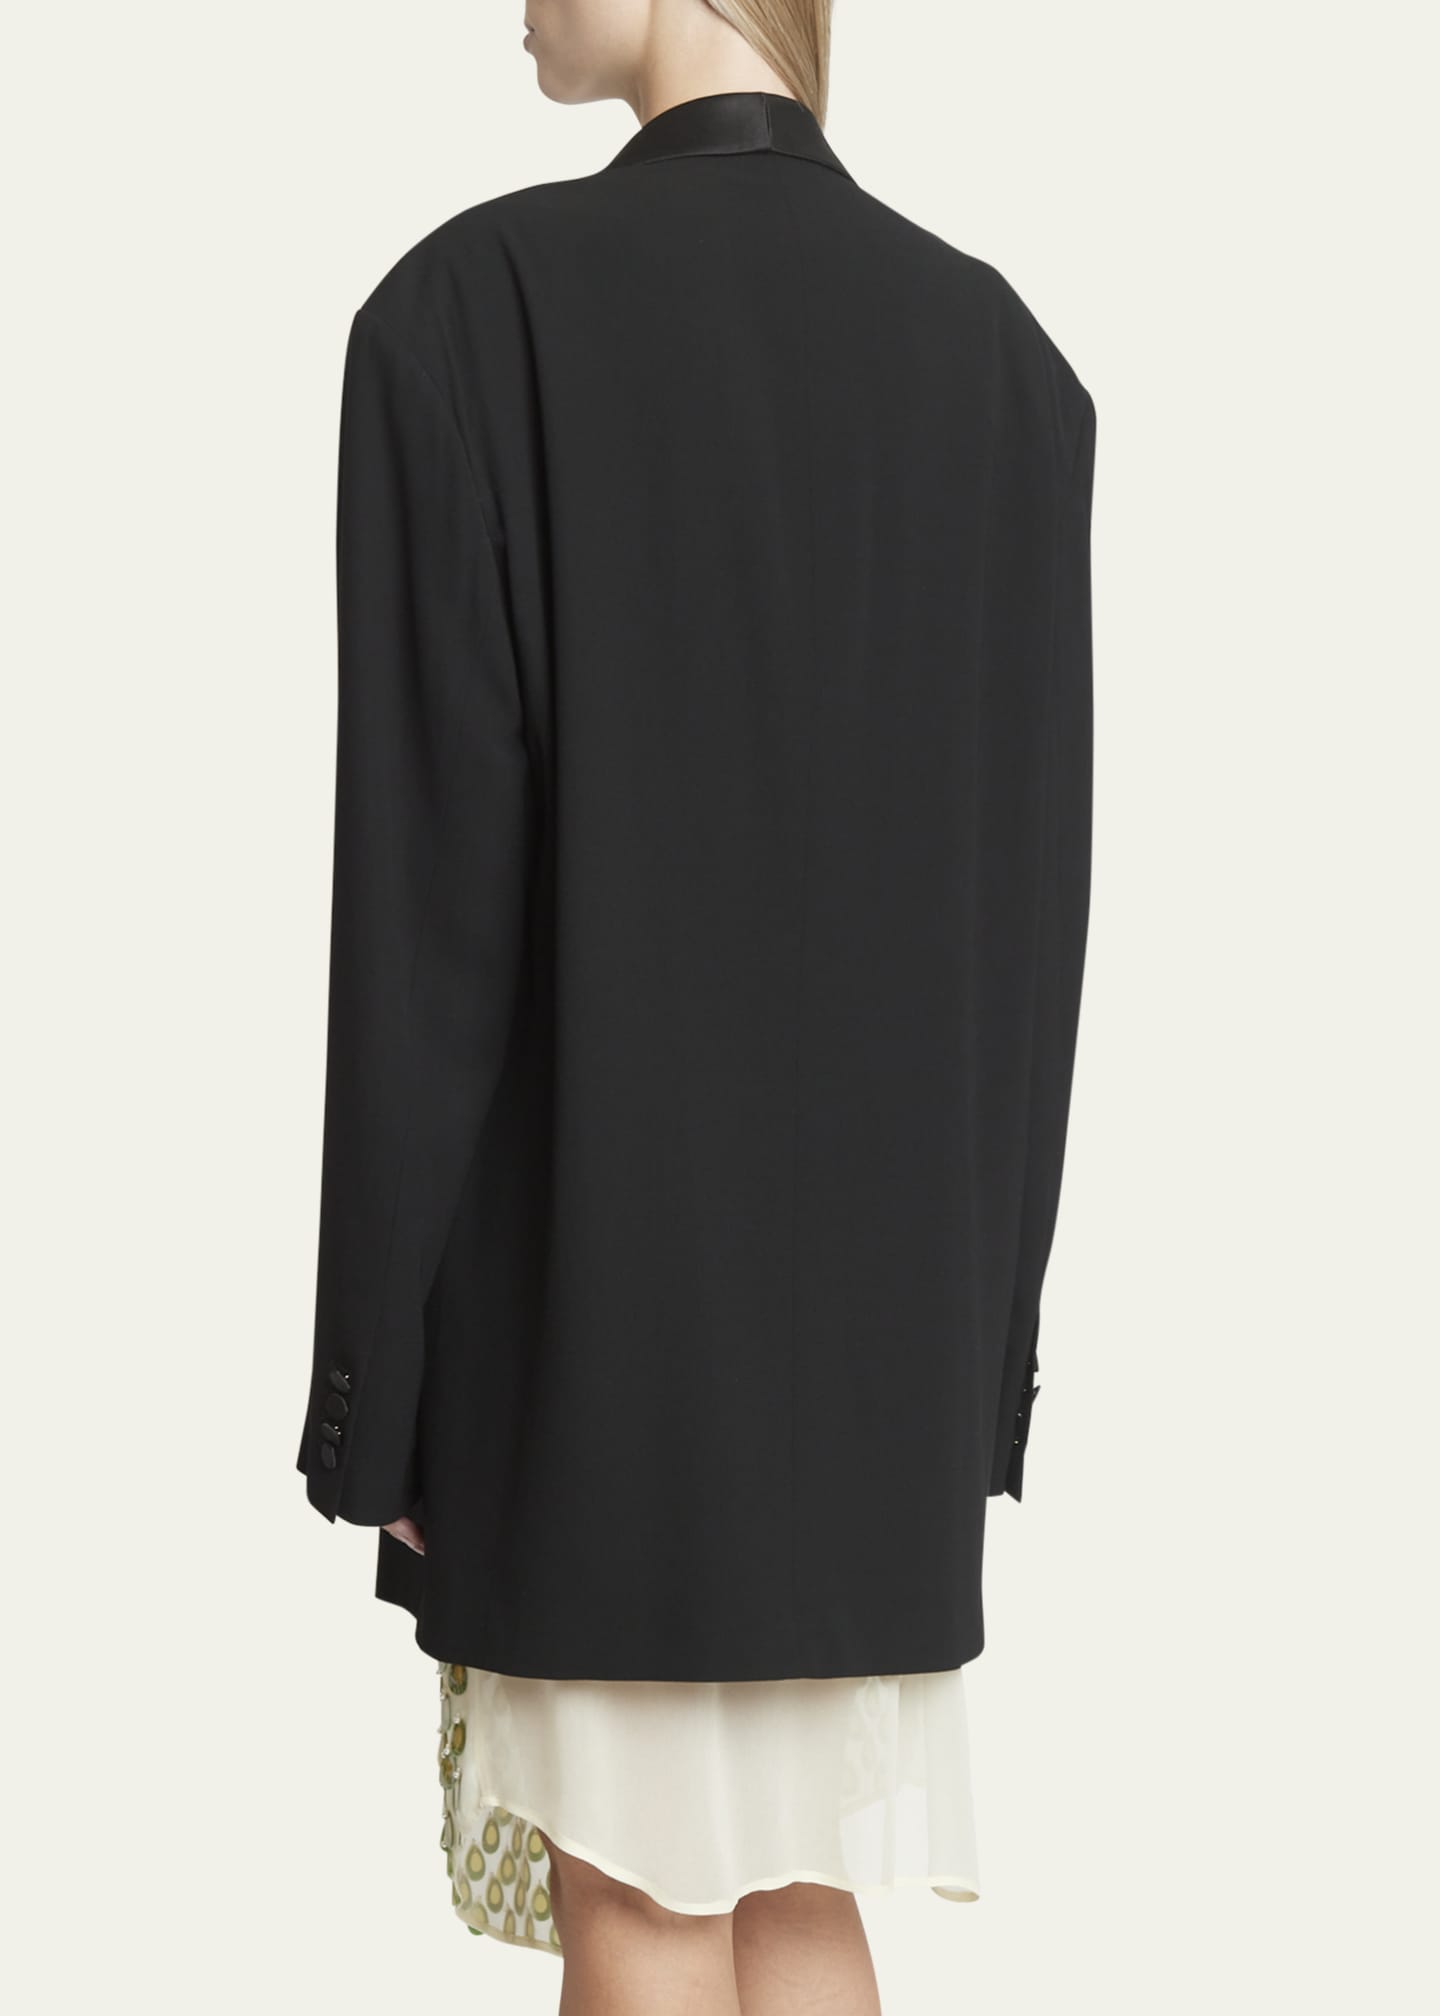 Dries Van Noten Blissy Oversized Tuexdo Jacket - Bergdorf Goodman